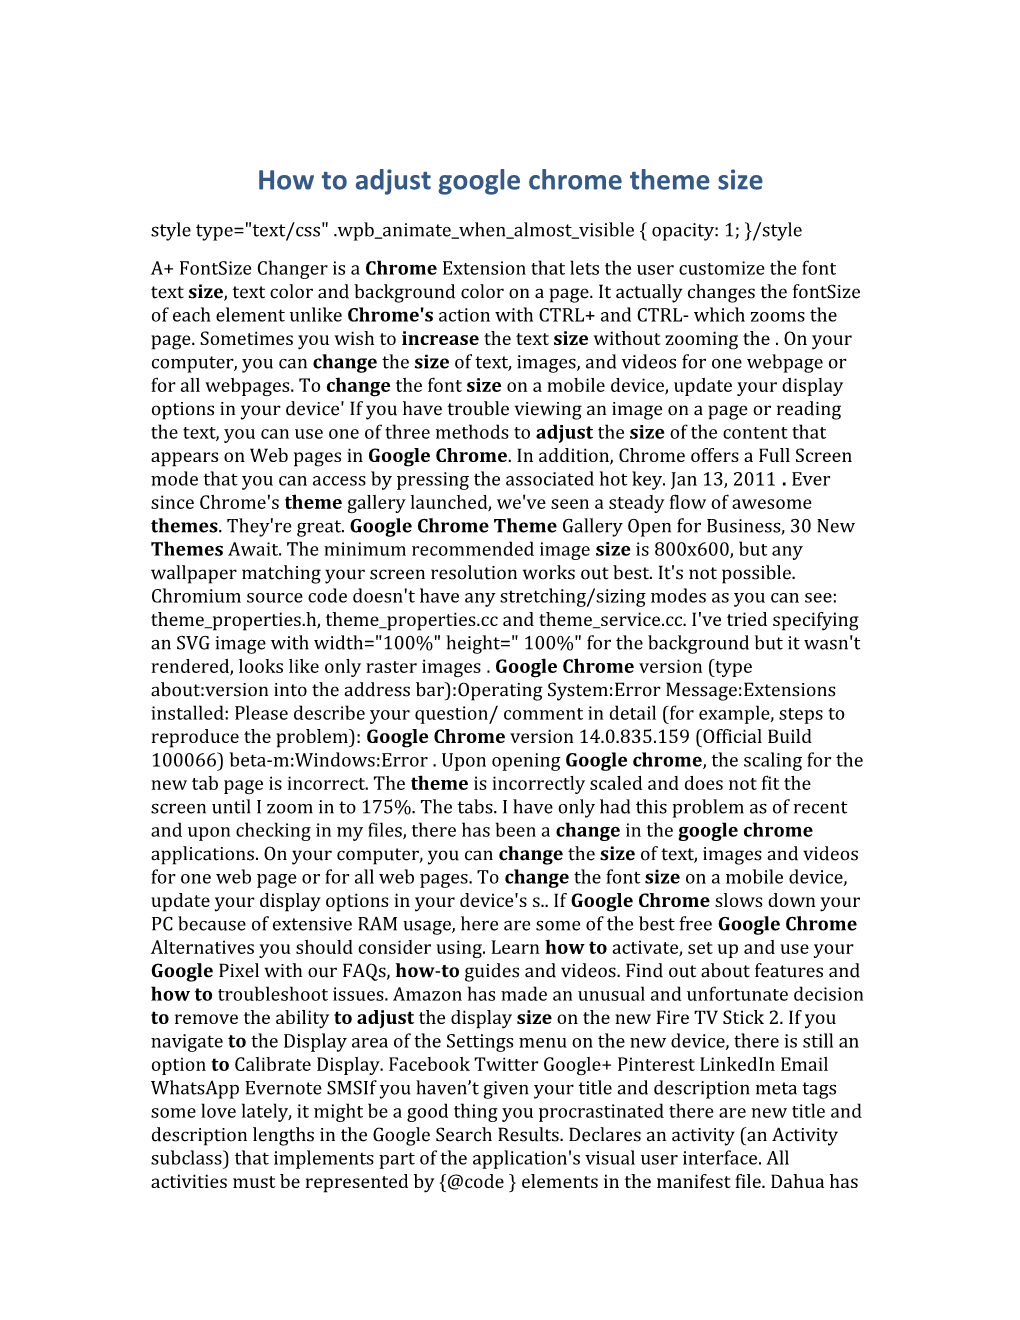 How to Adjust Google Chrome Theme Size